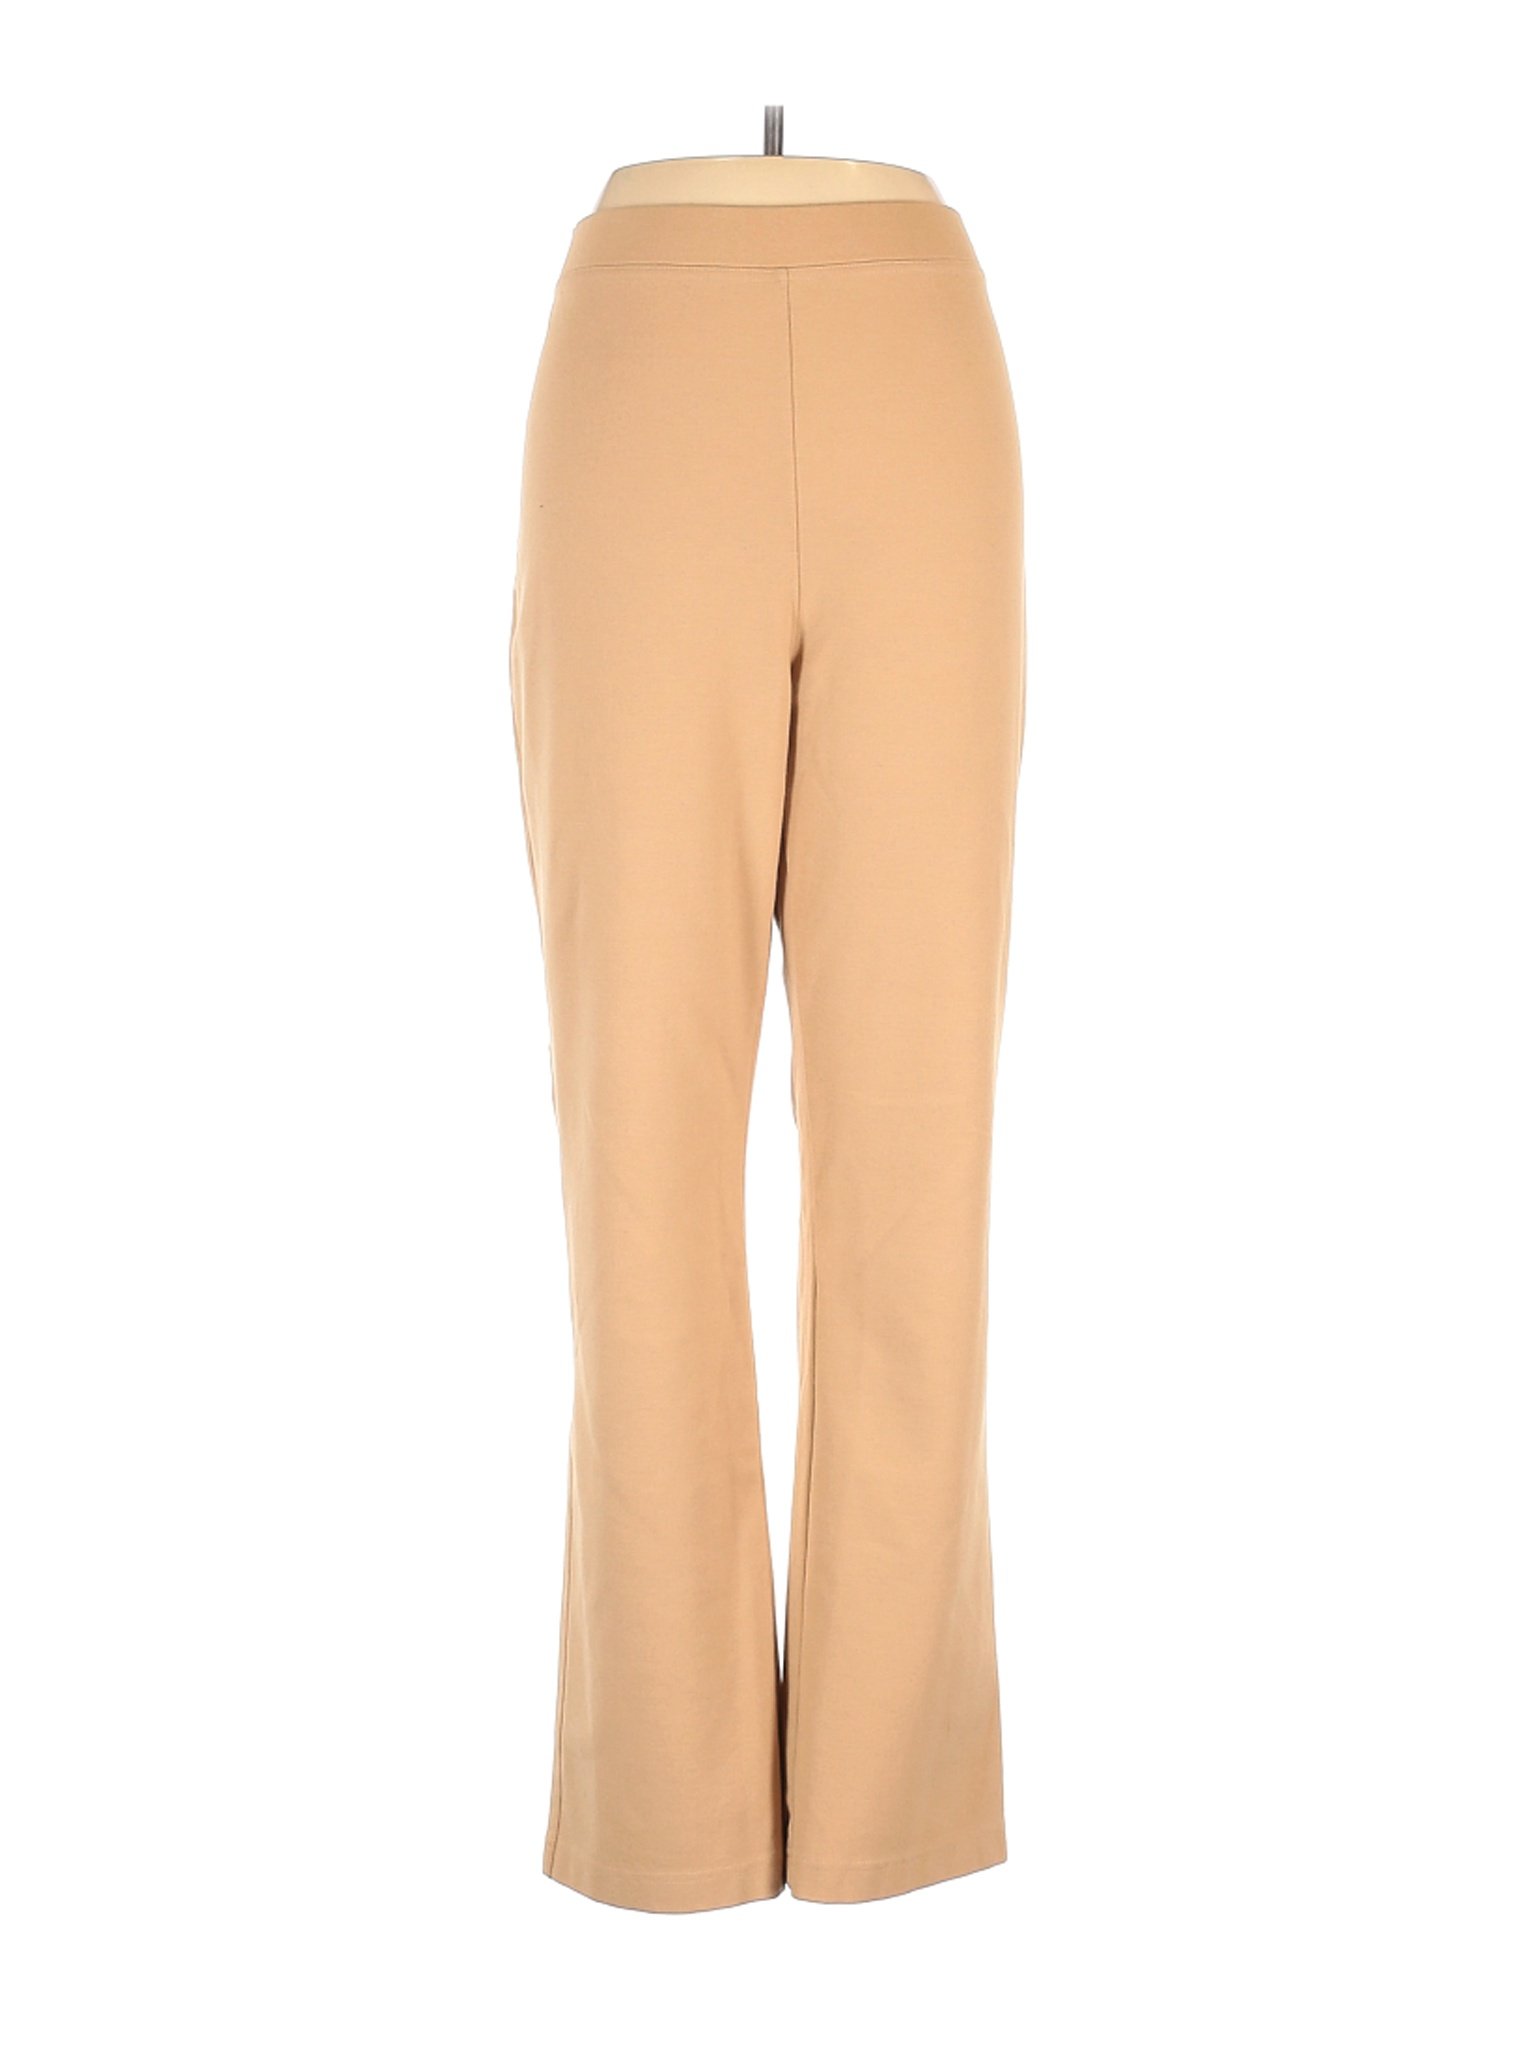 Chelsea Studio Women Brown Casual Pants 4 | eBay